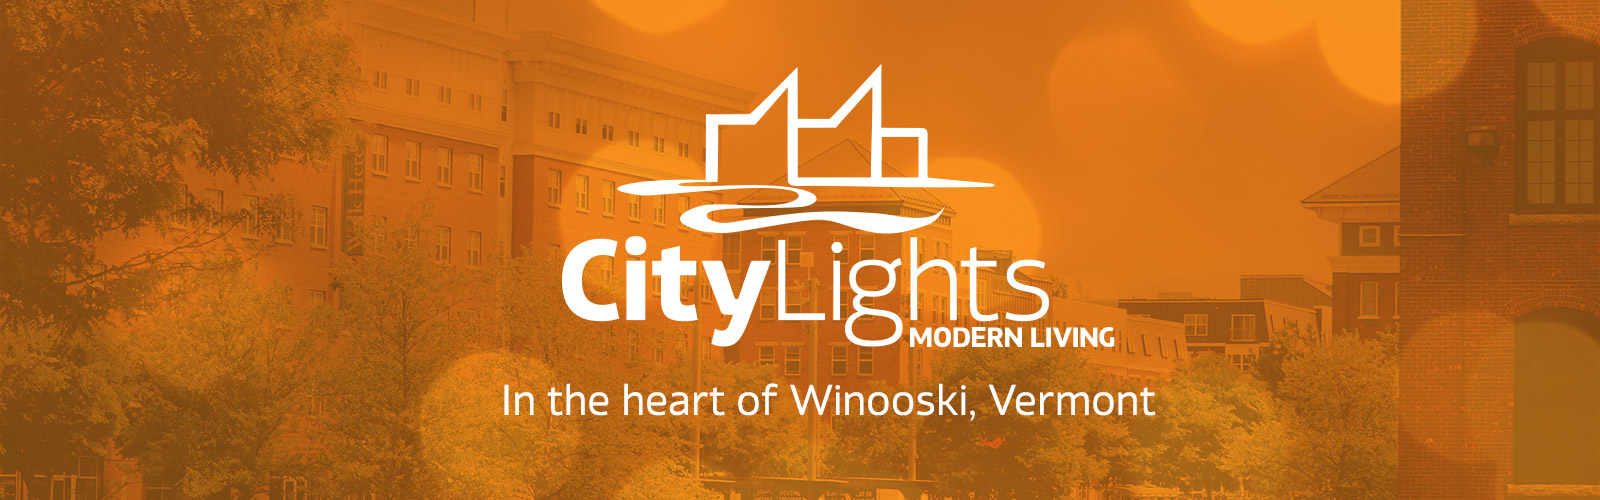 CityLights Winooski VT